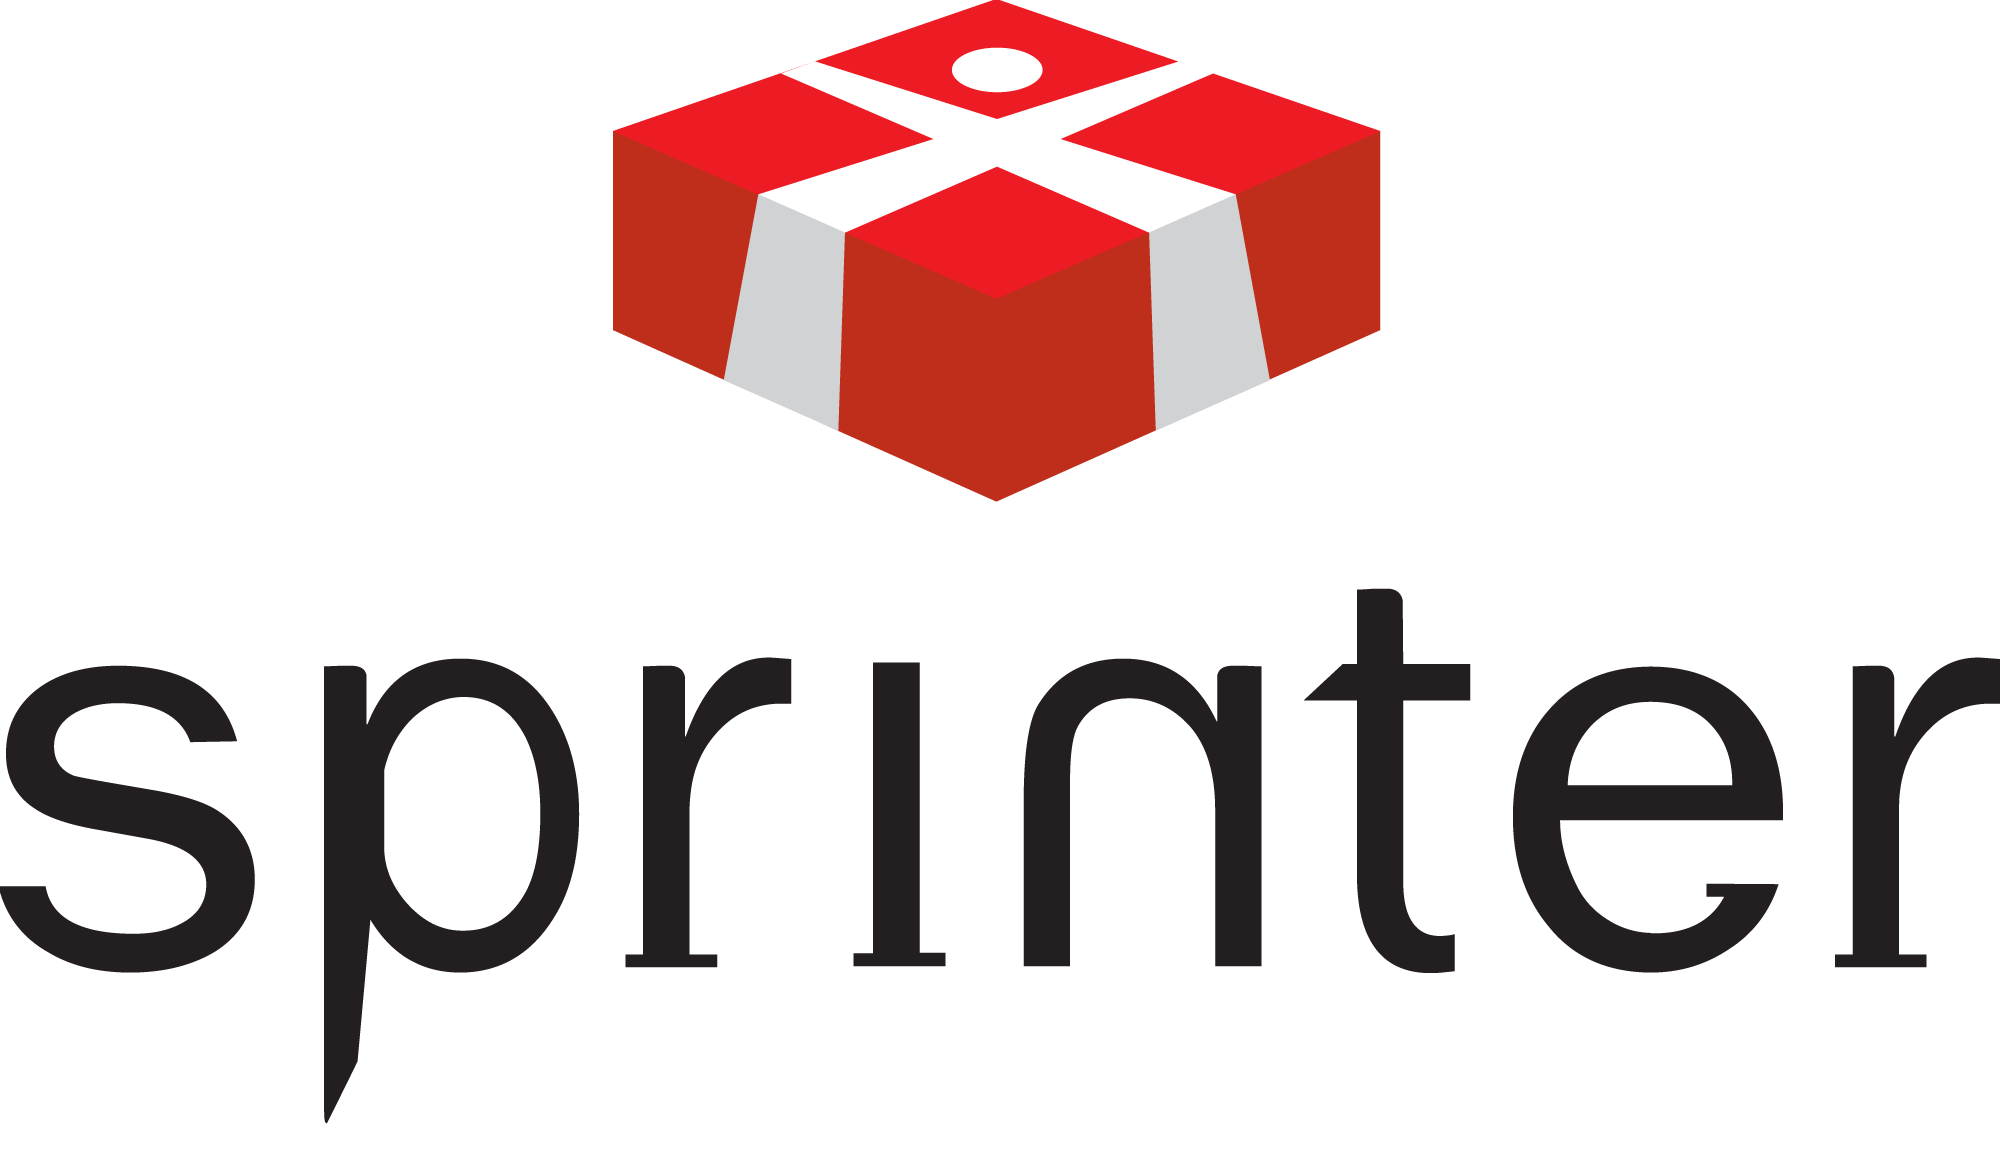 Sprinter Logo - SPRINTER logo (áttetsző háttér)